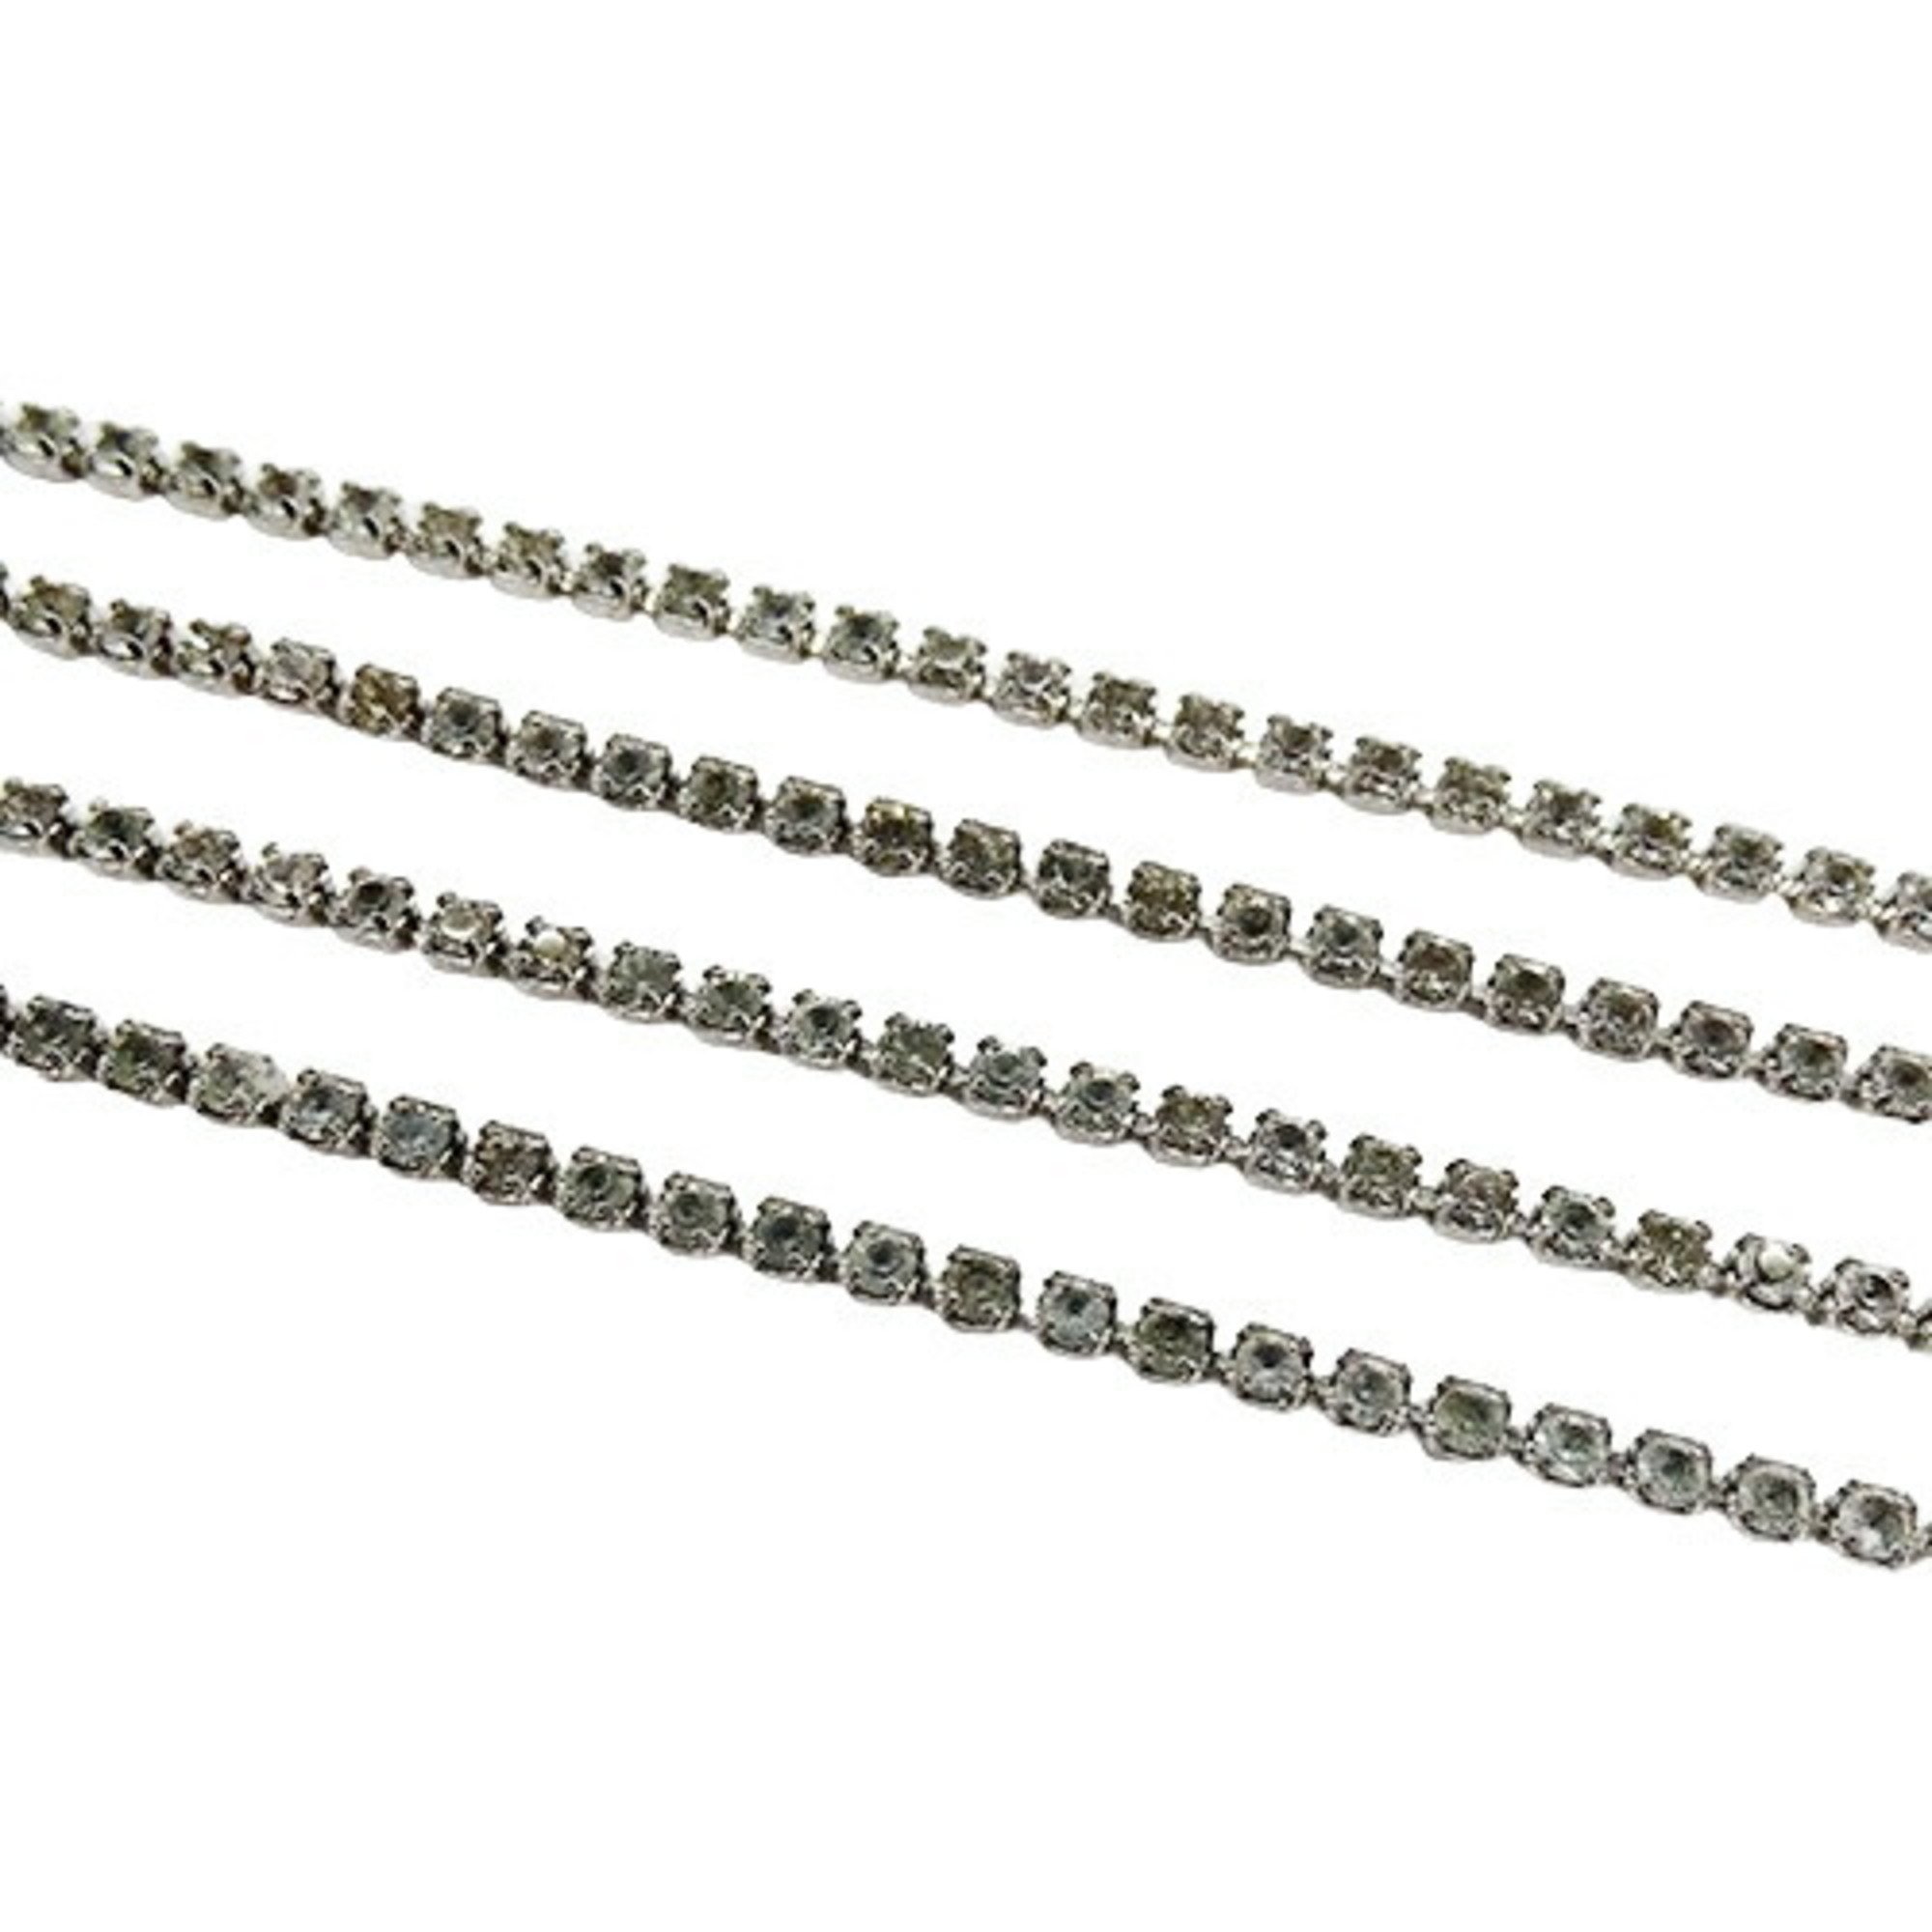 Christian Dior Necklace Women's Rhinestone Silver 2 Rows D